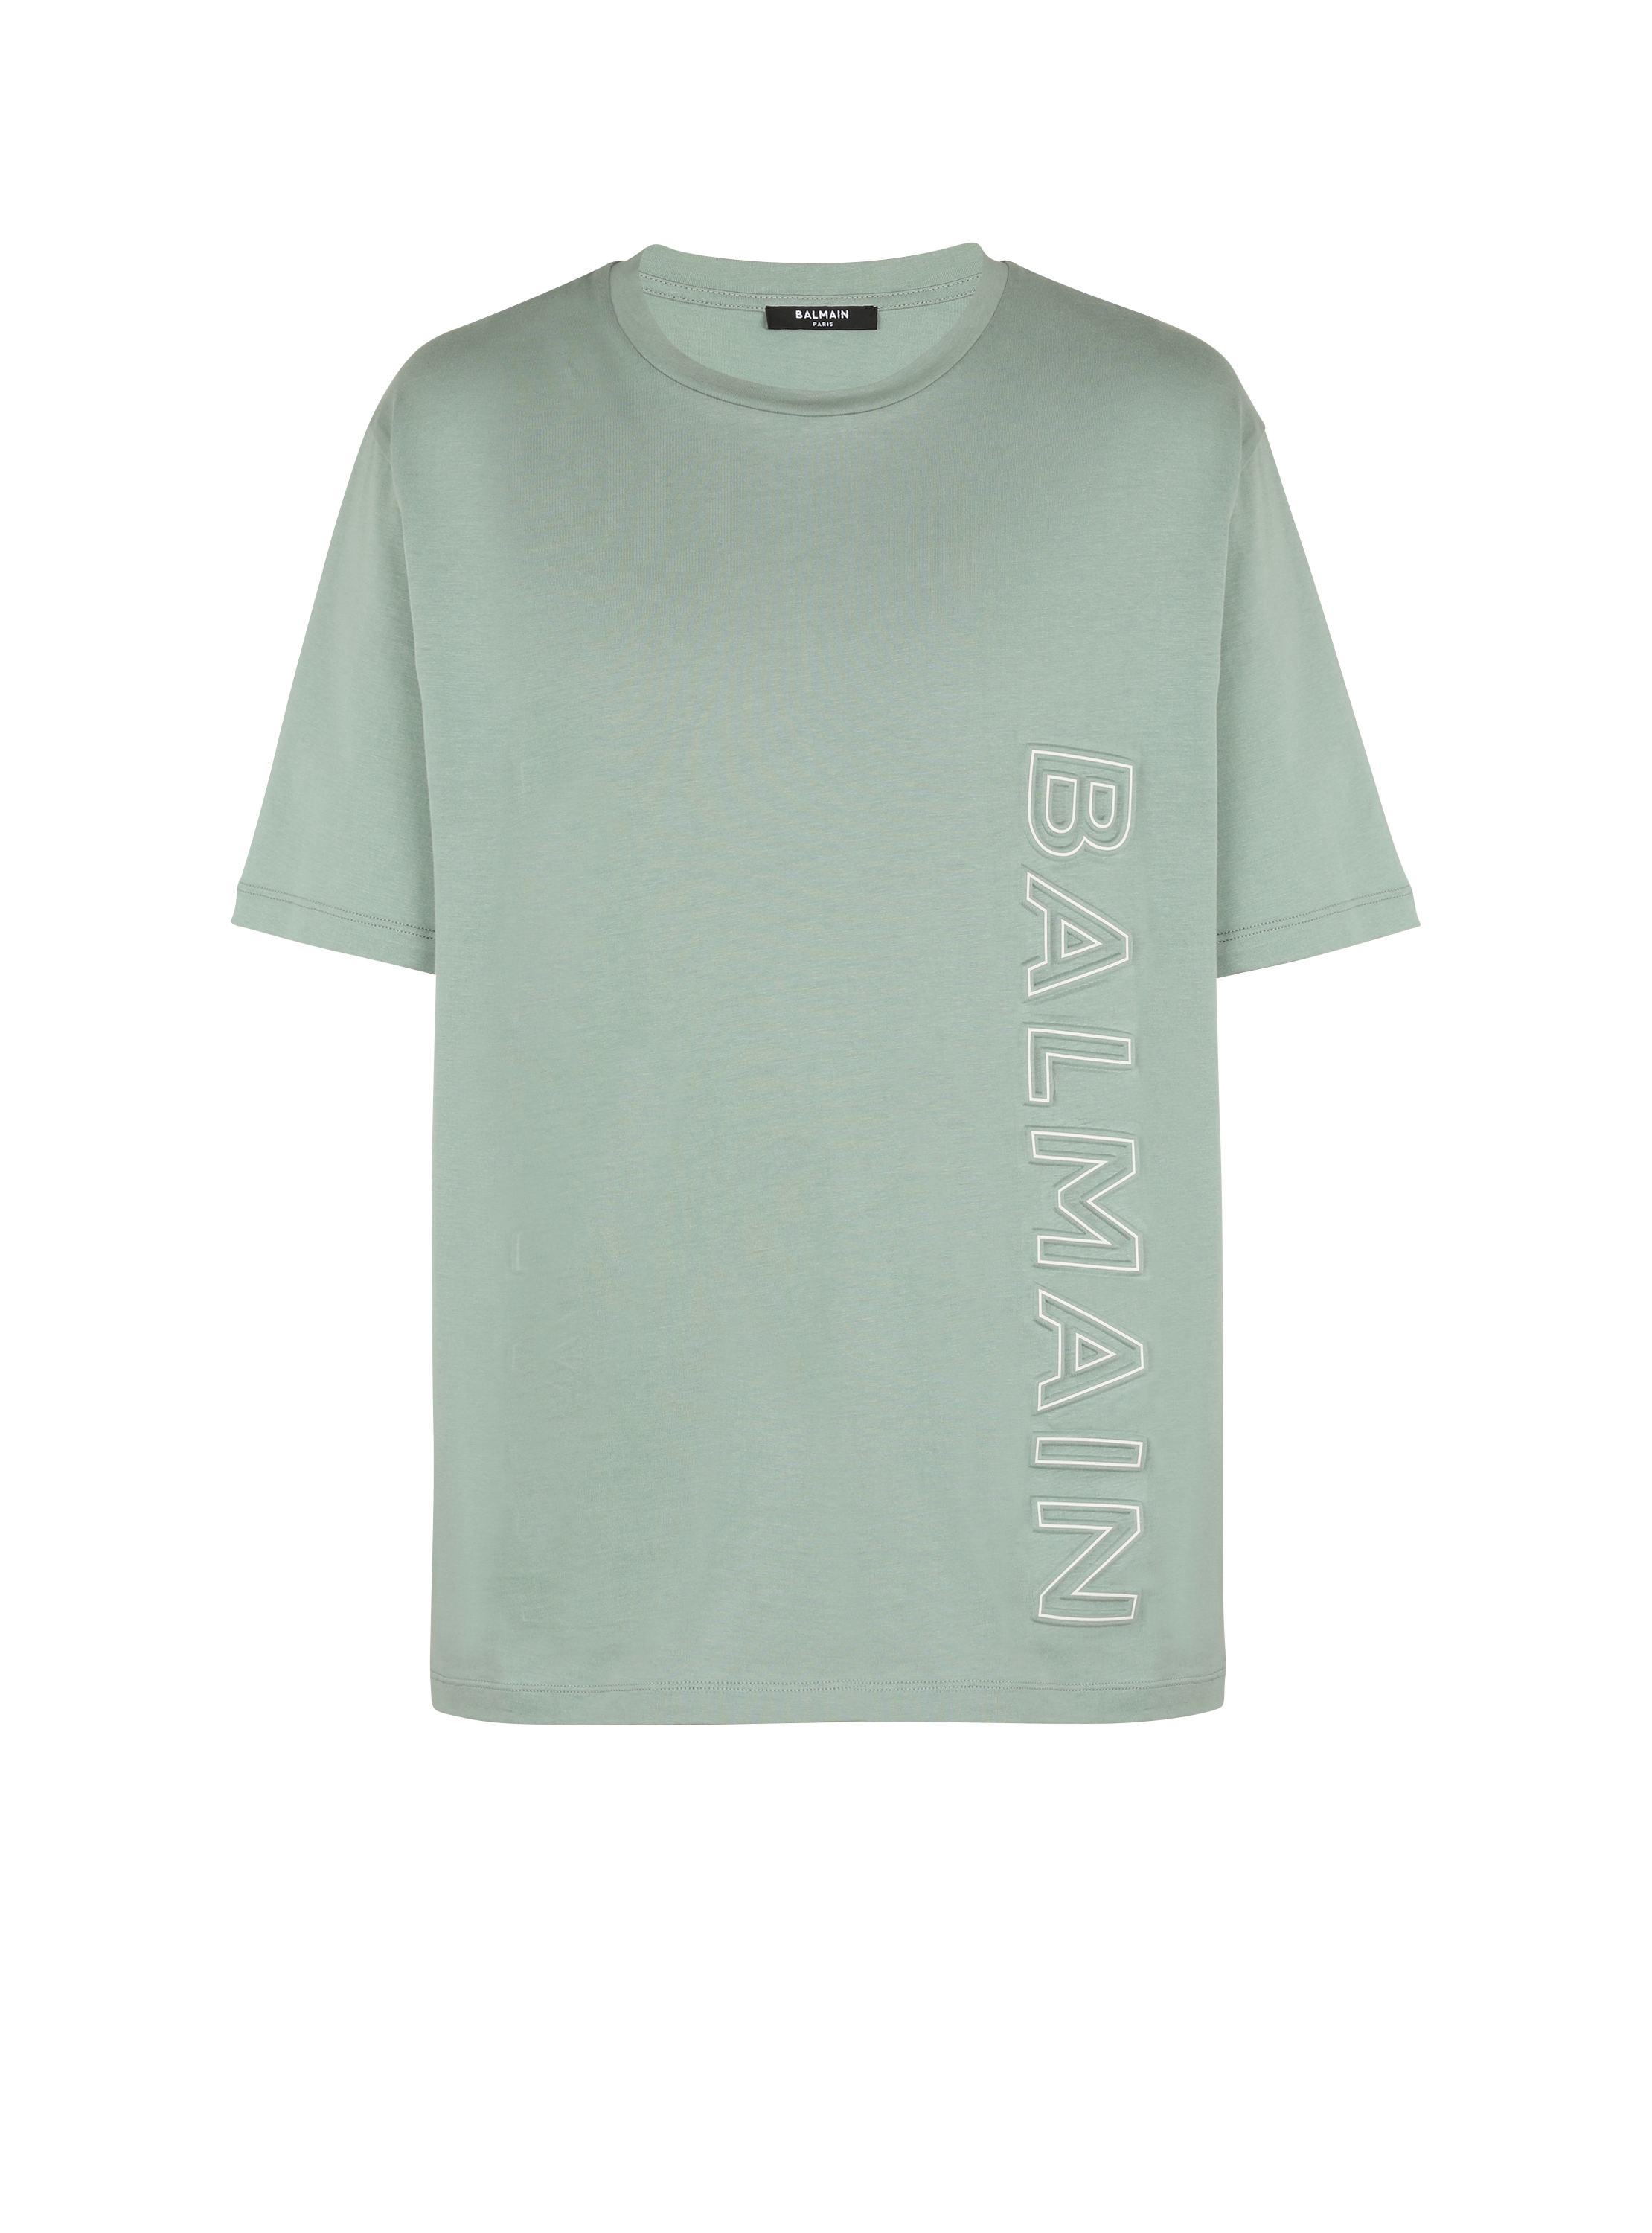 T-shirt oversize à logo Balmain embossé, vert, hi-res